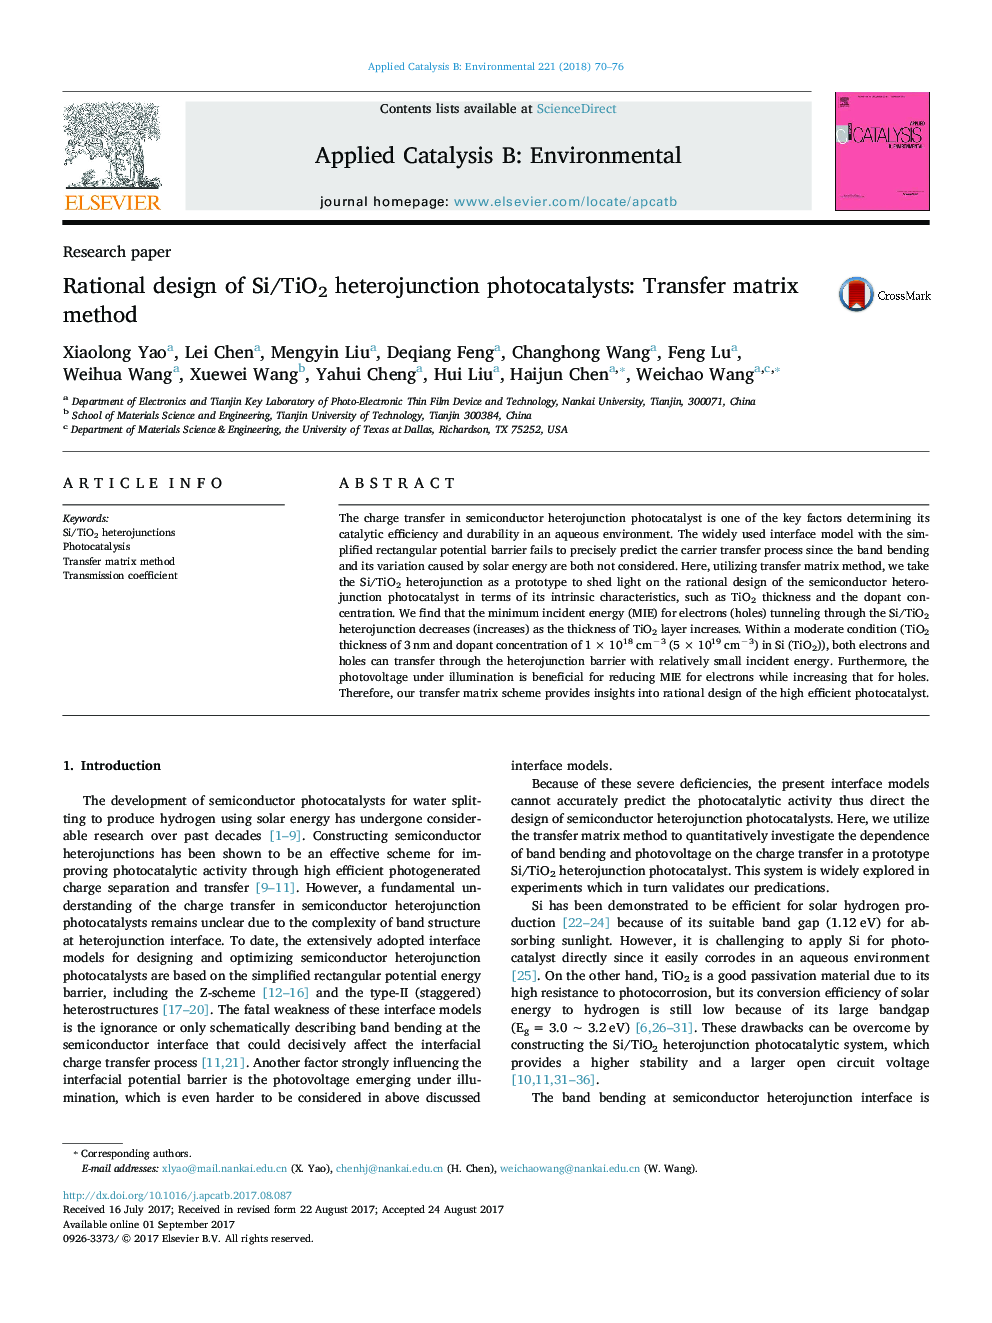 Research paperRational design of Si/TiO2 heterojunction photocatalysts: Transfer matrix method